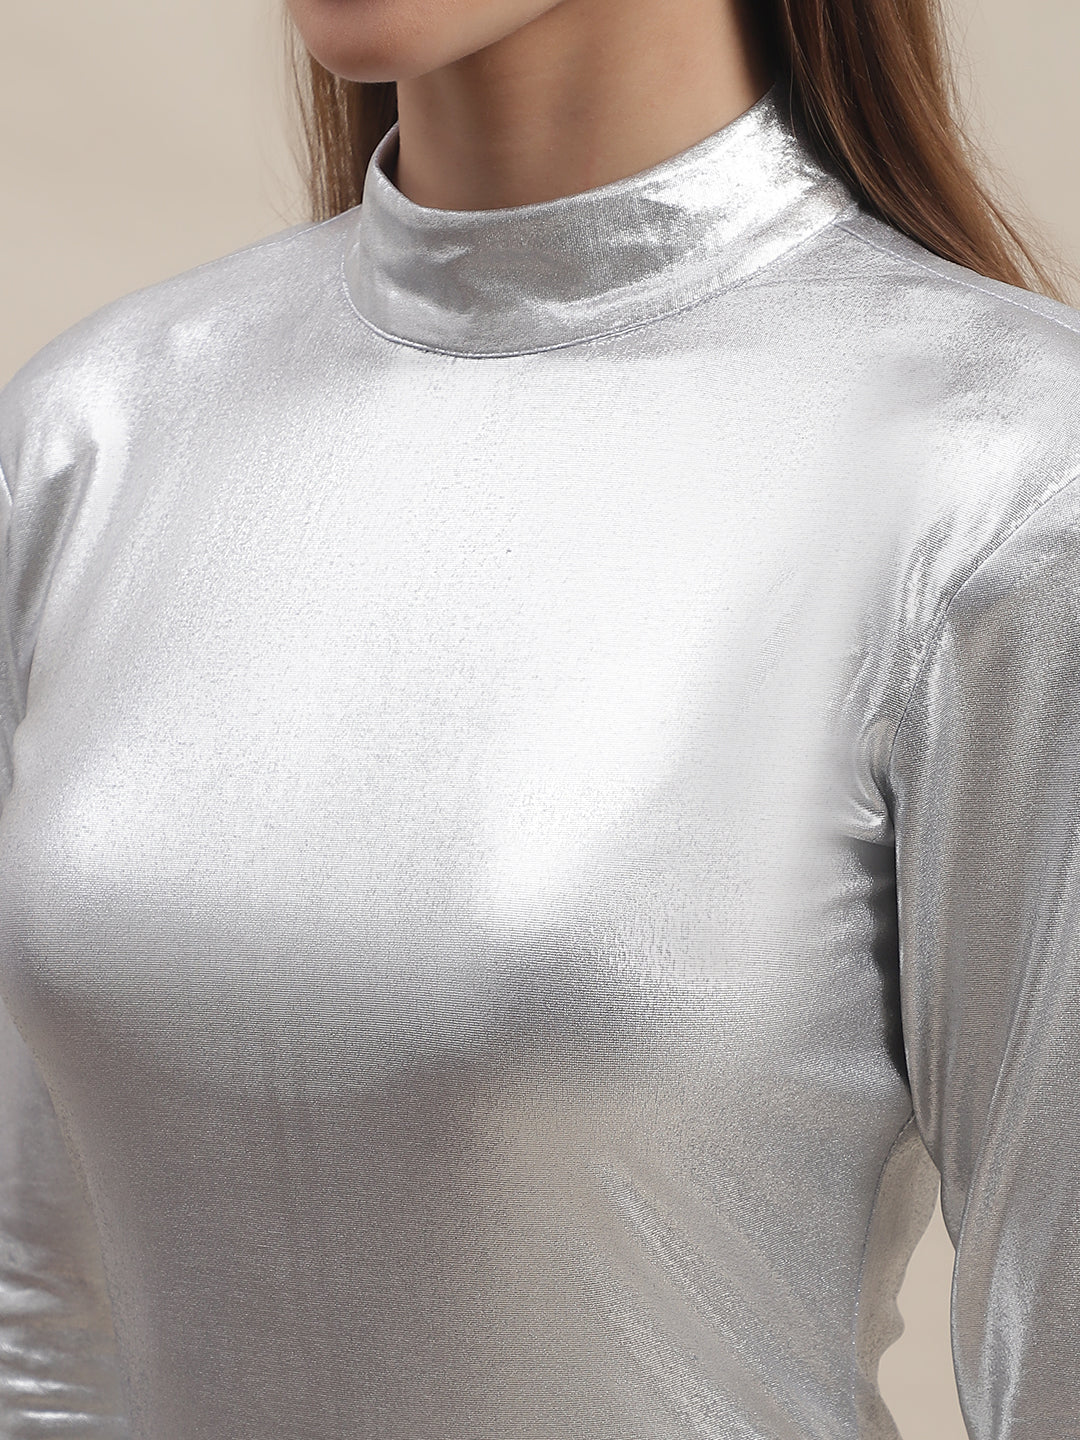 Blanc9 Silver Bodycon Dress-B9DR148